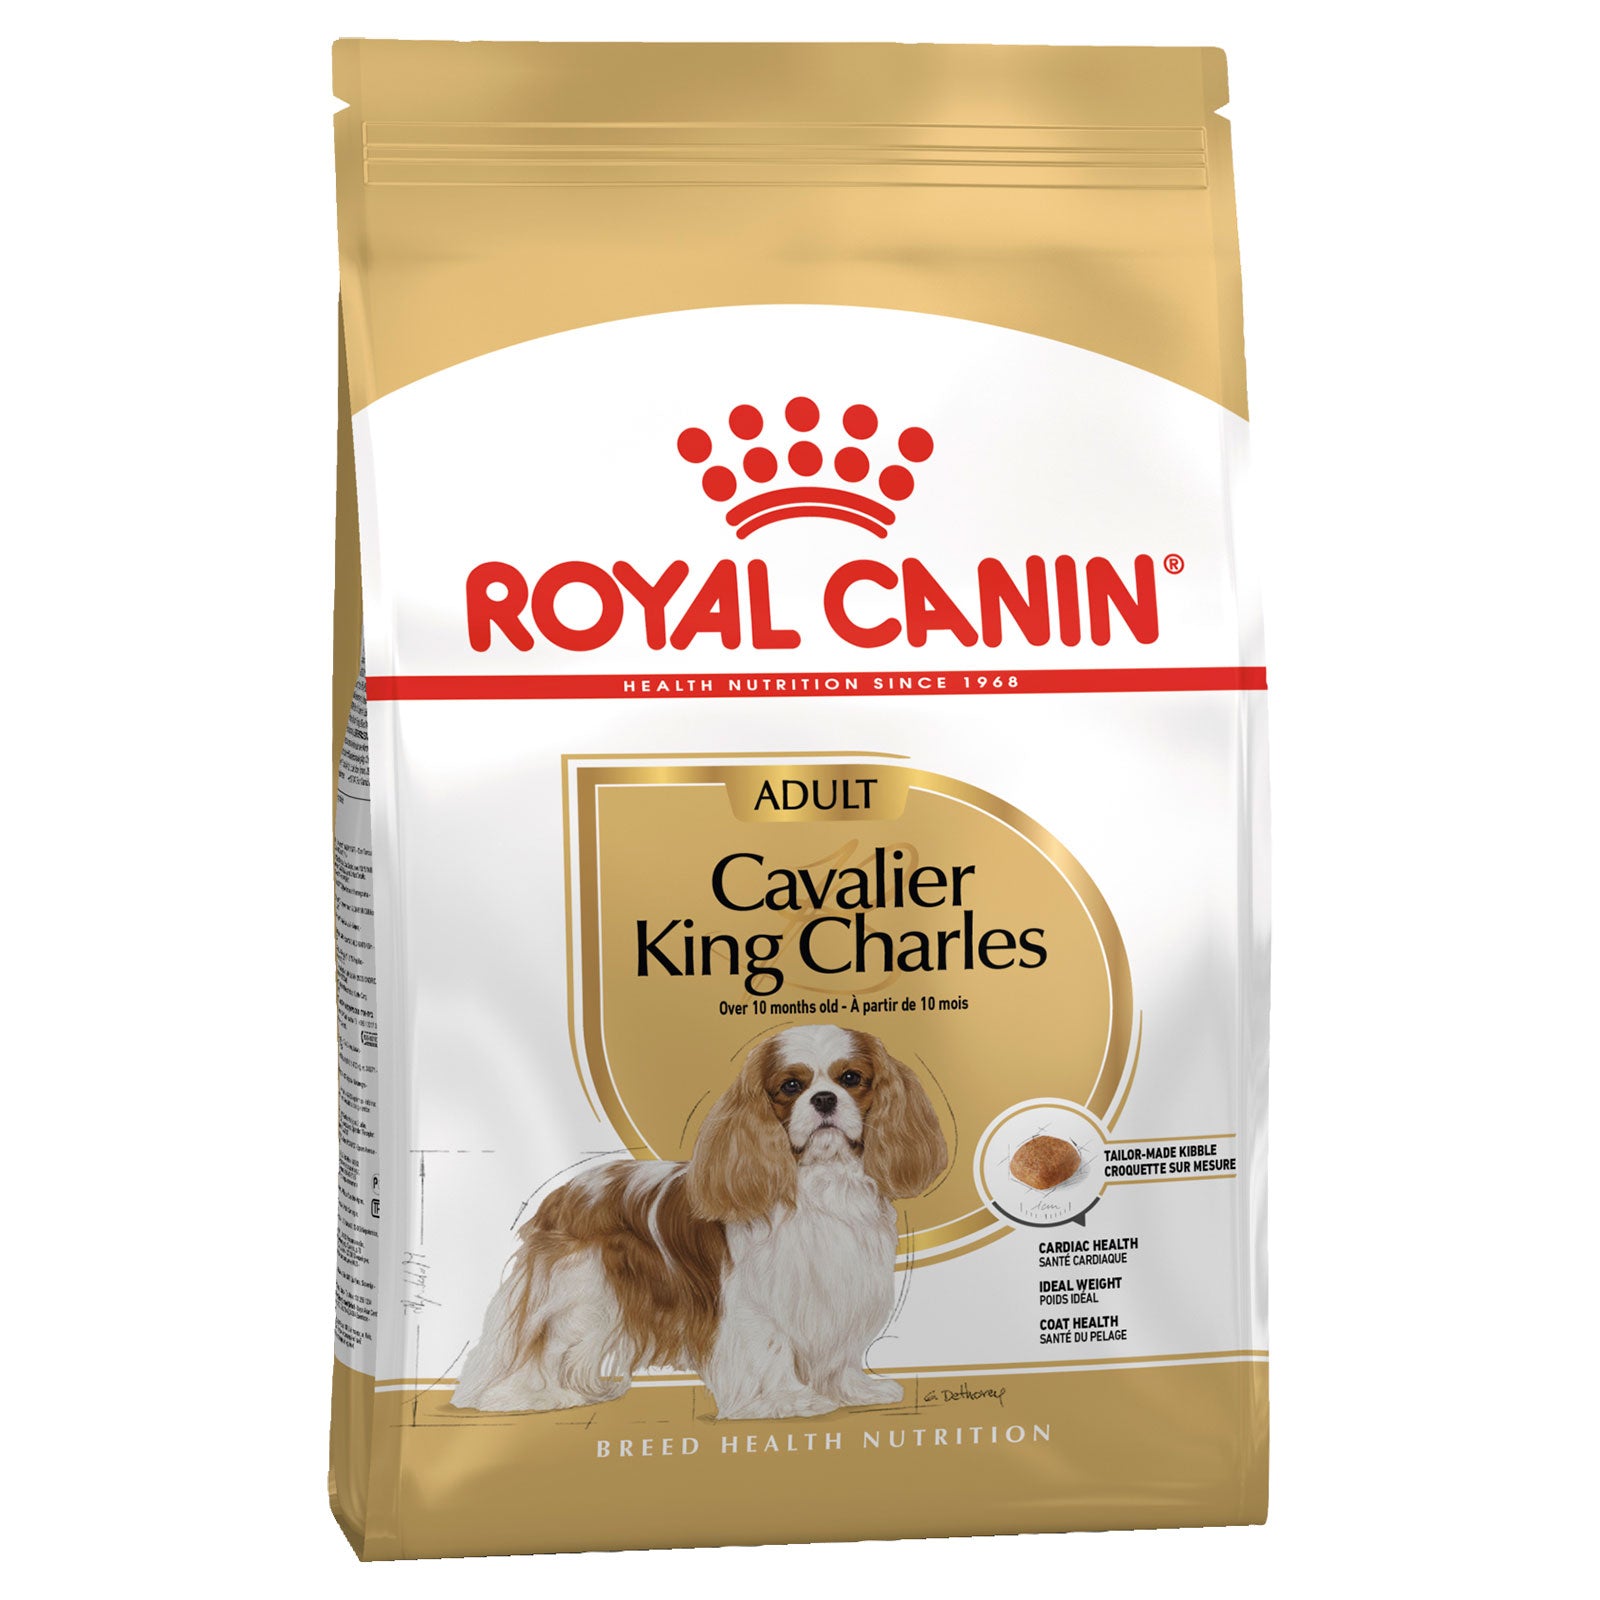 Royal Canin Dog Food Adult Cavalier King Charles